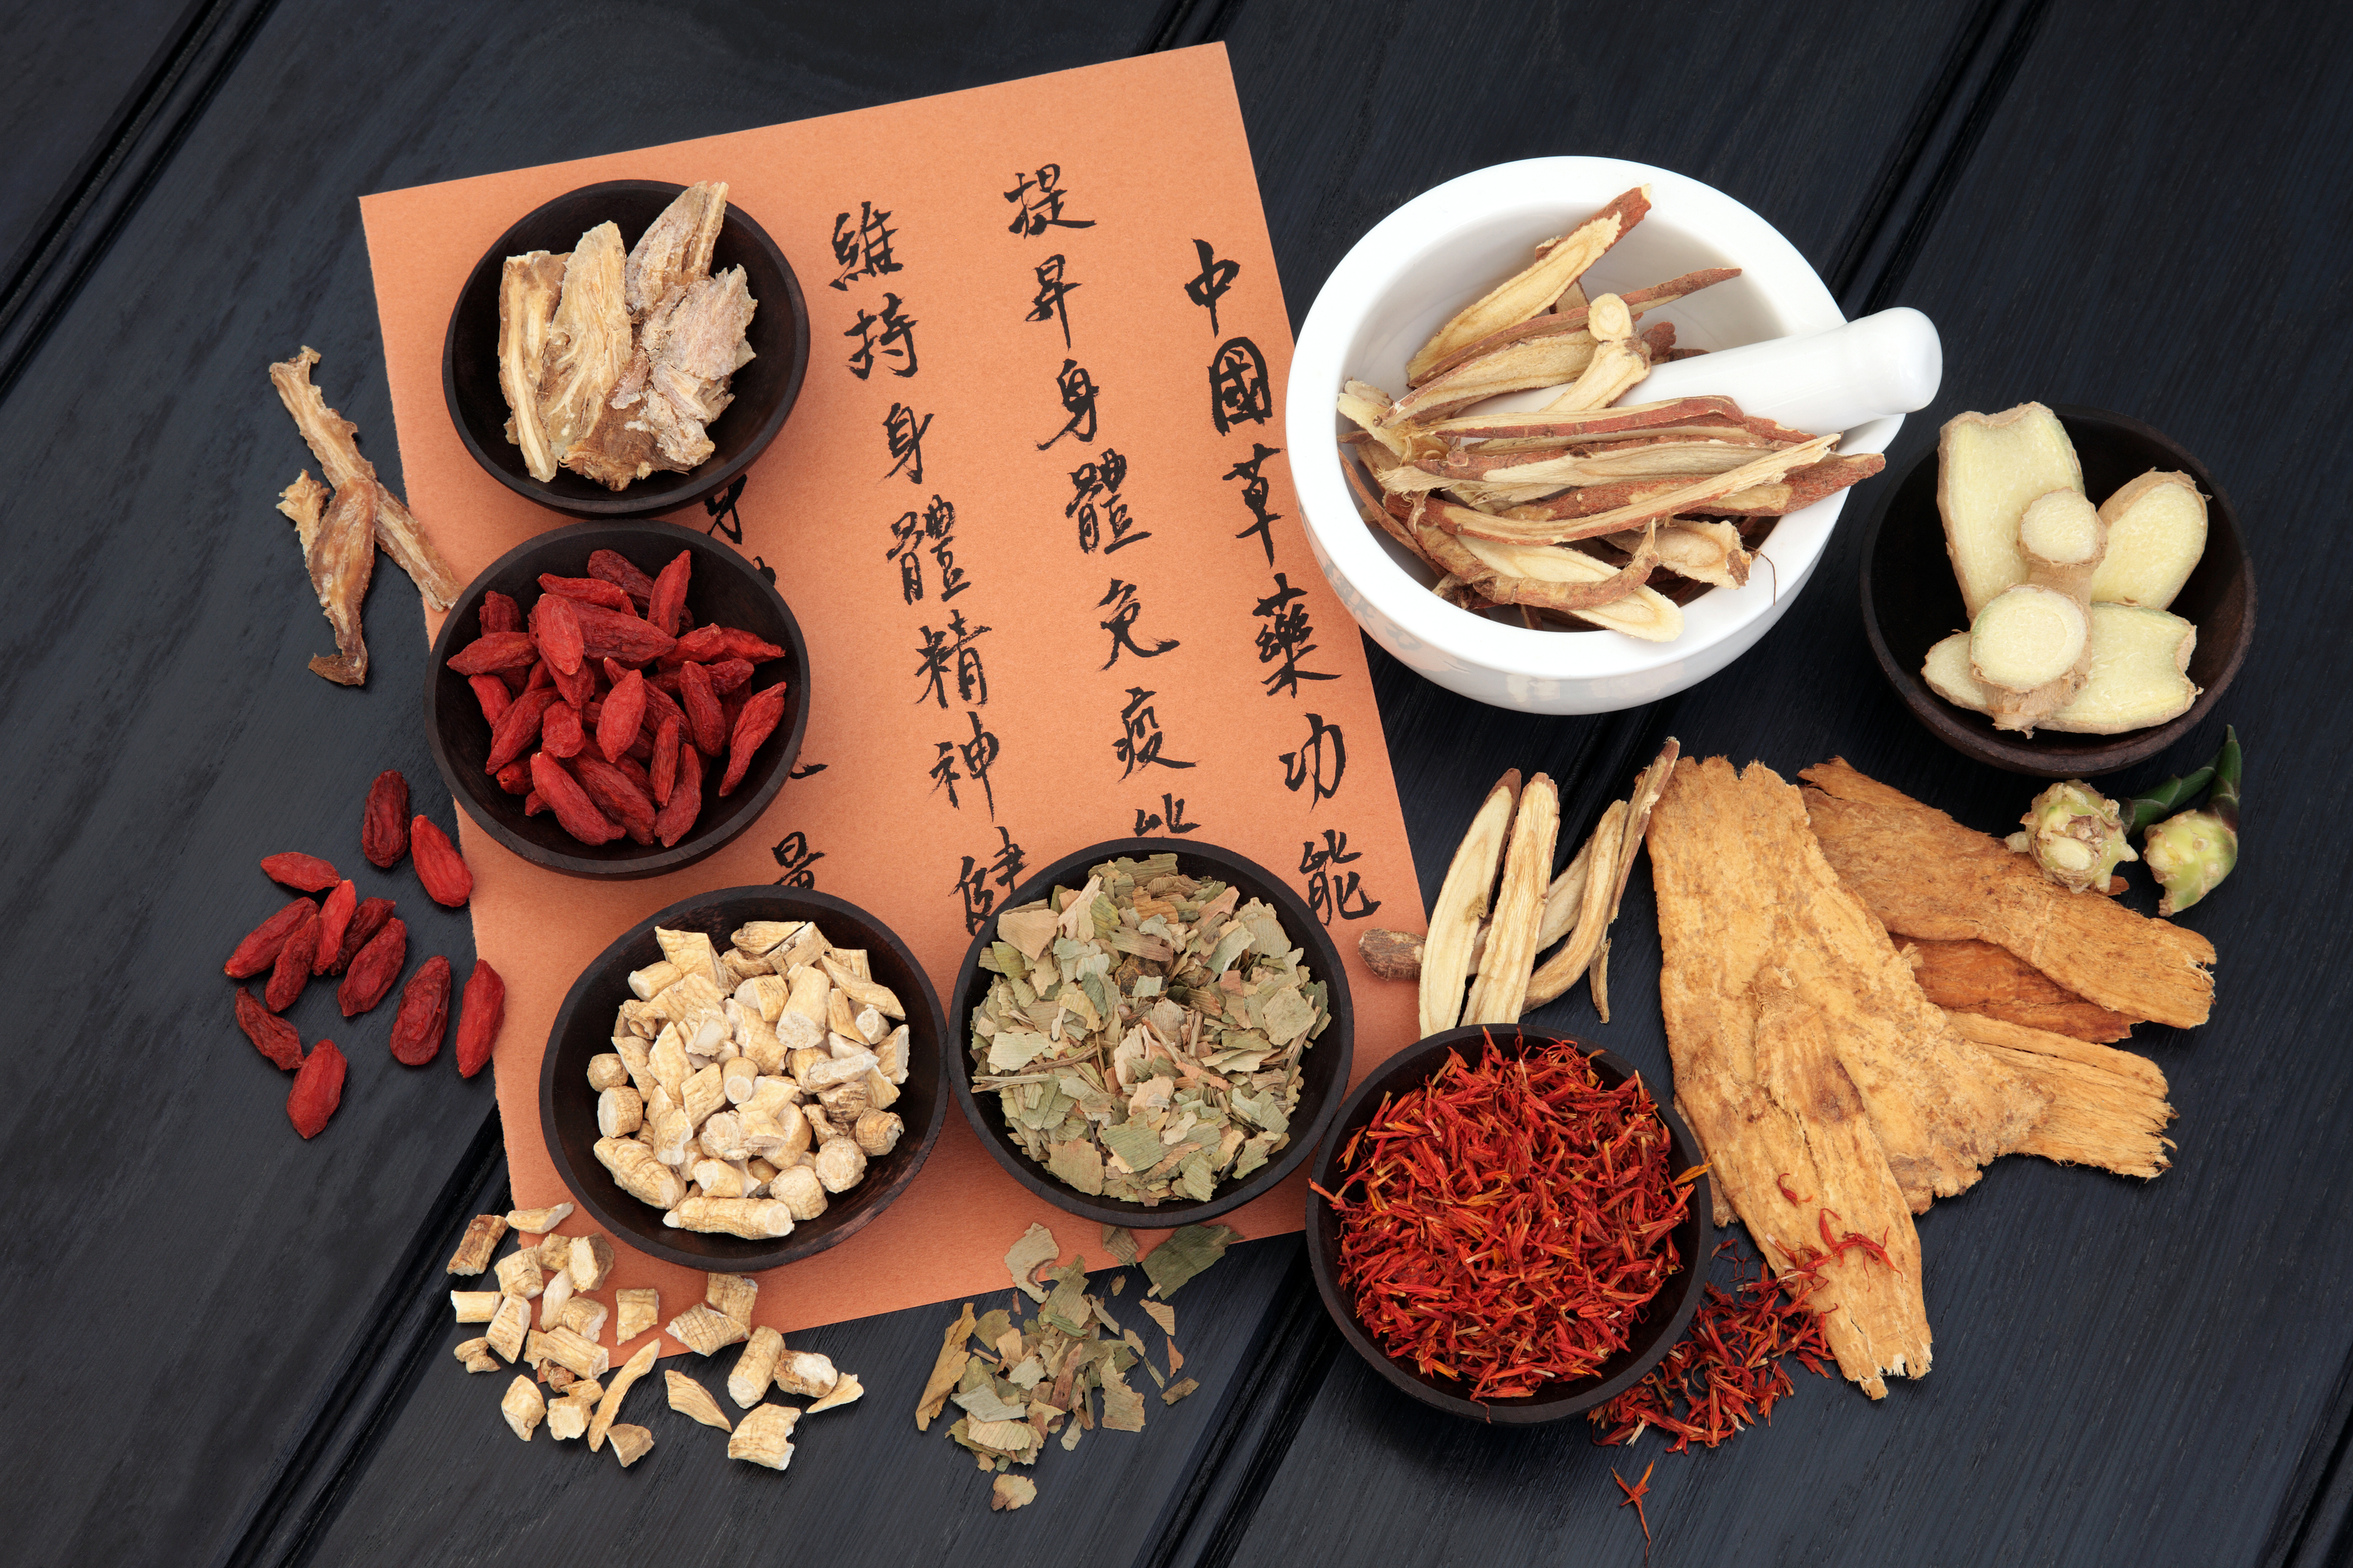 Assortment of medicinal herbs